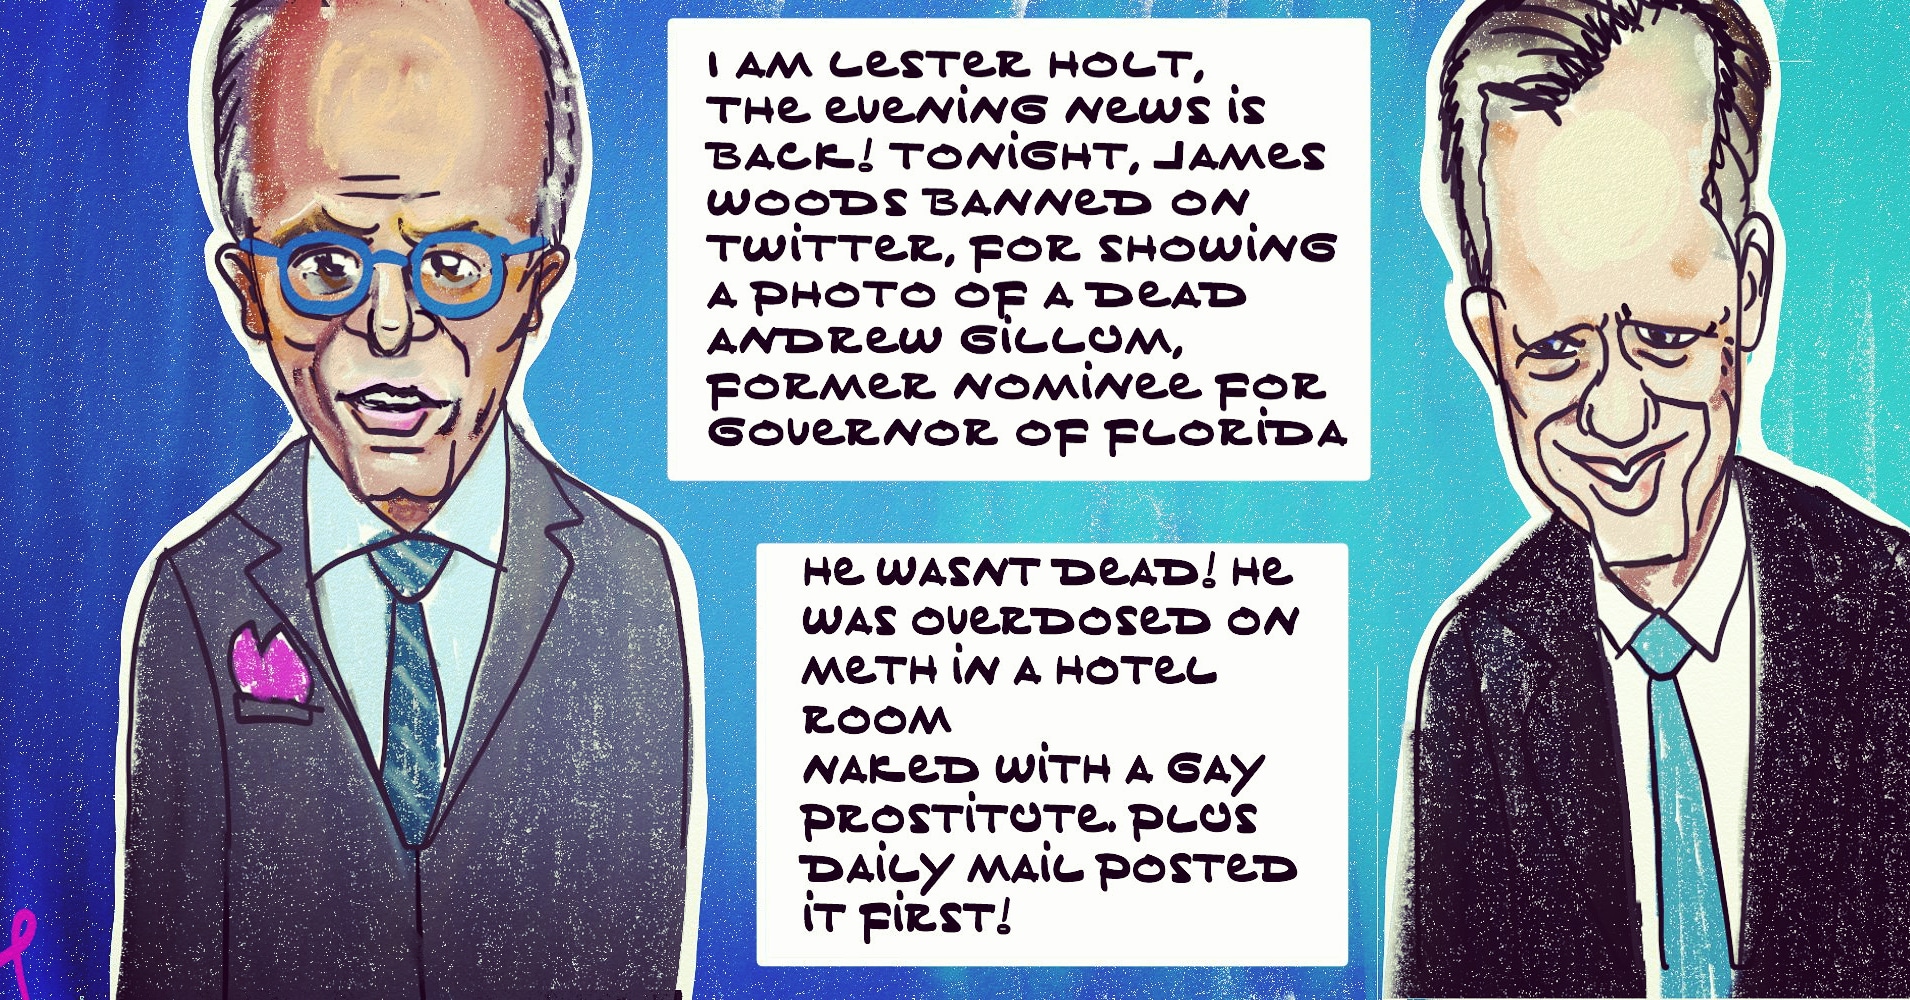 Lester holt free James Woods Andrew Gillum political cartoon post thumbnail image